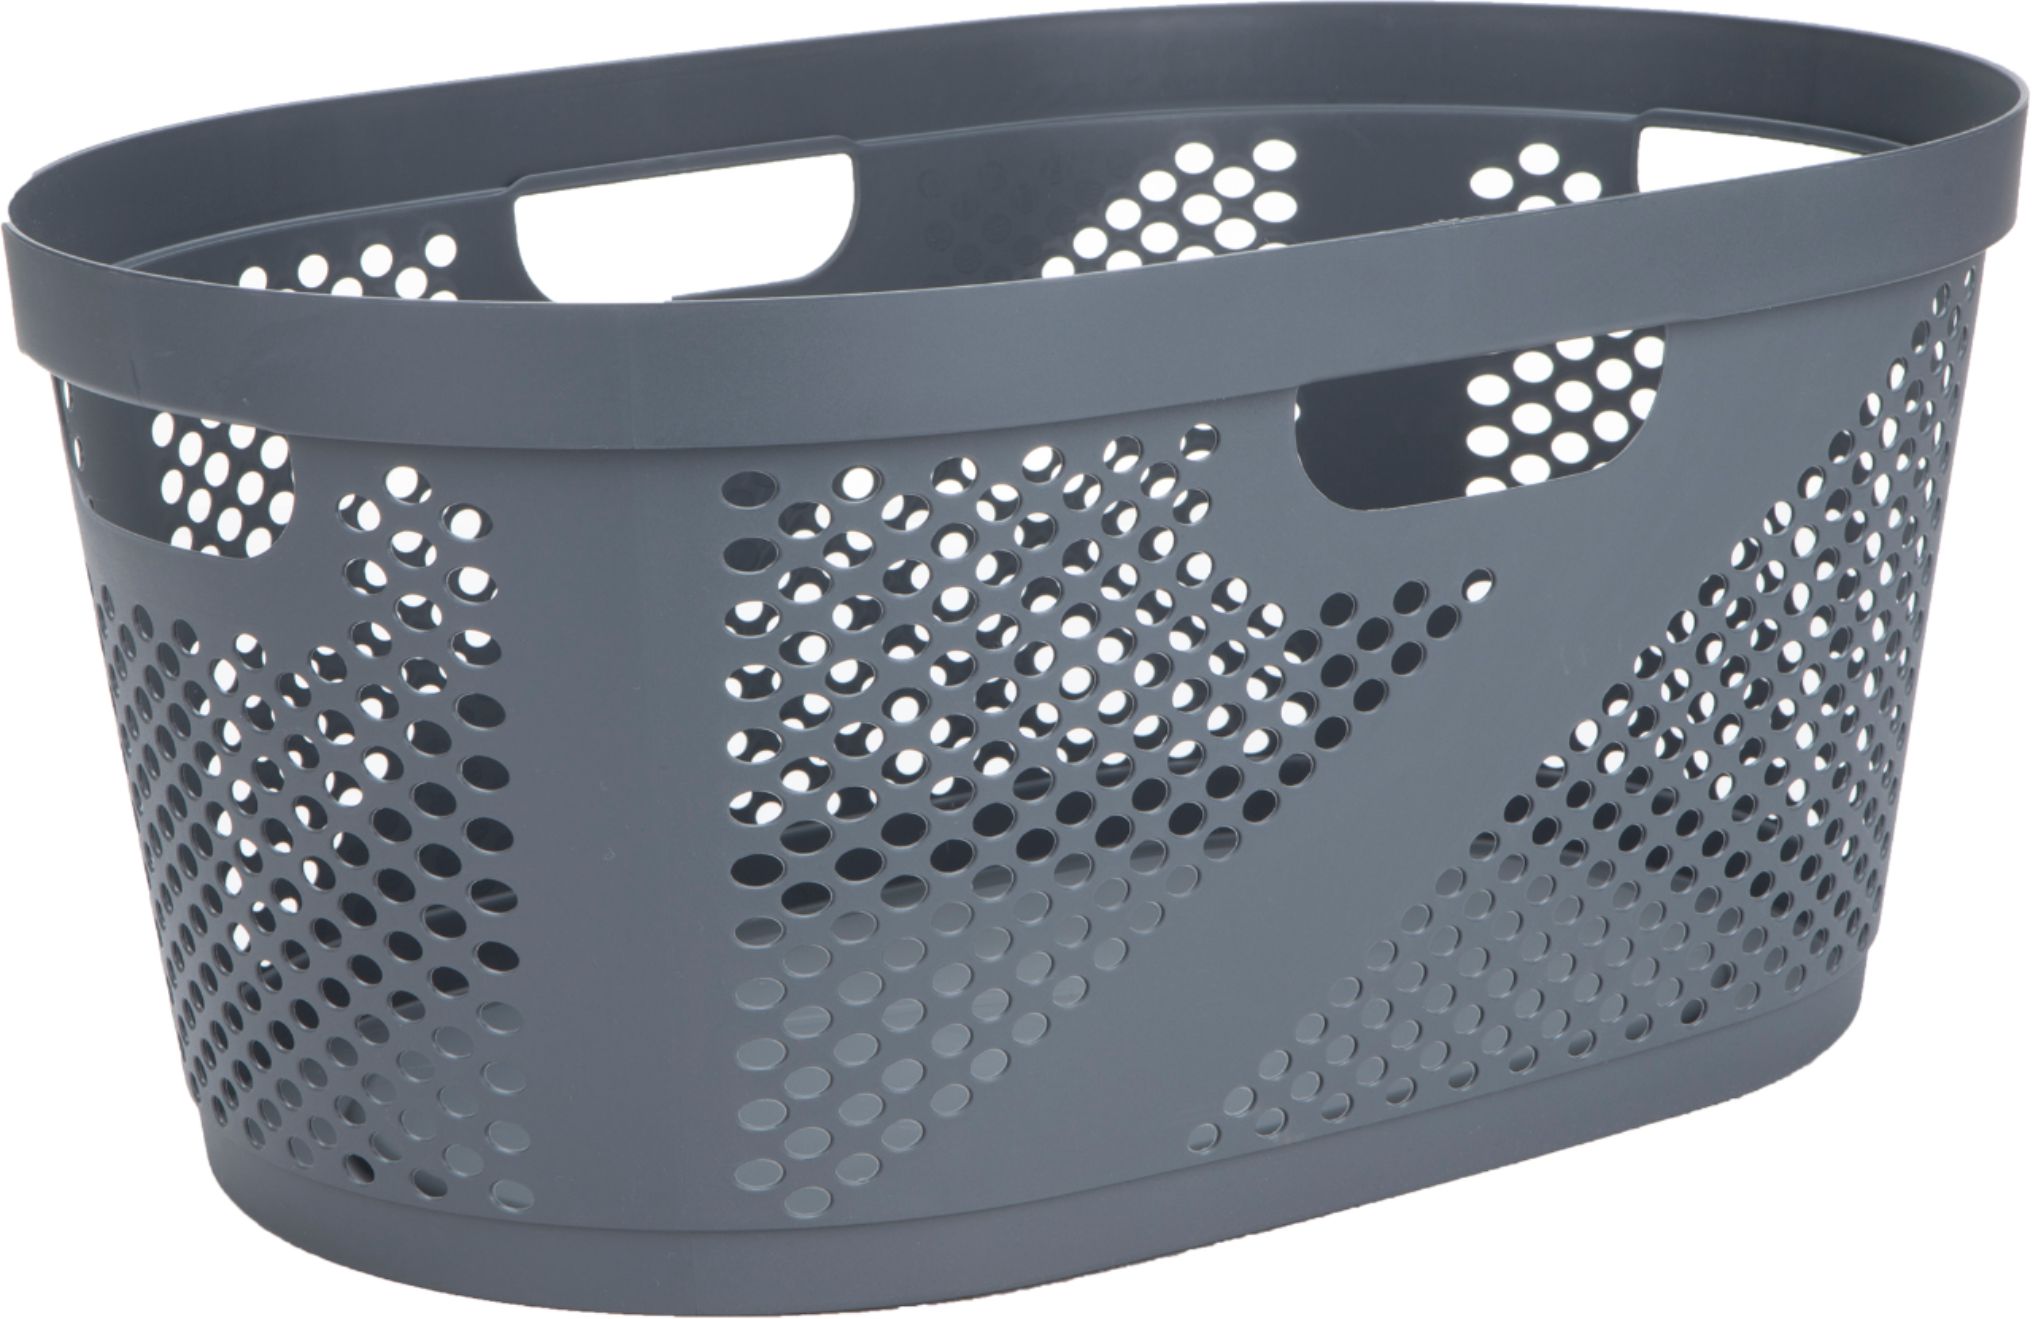 Angle View: Mind Reader - 40 Liter Laundry Basket, Laundry Basket, Storage Basket, Bathroom, Bedroom, Home - Grey